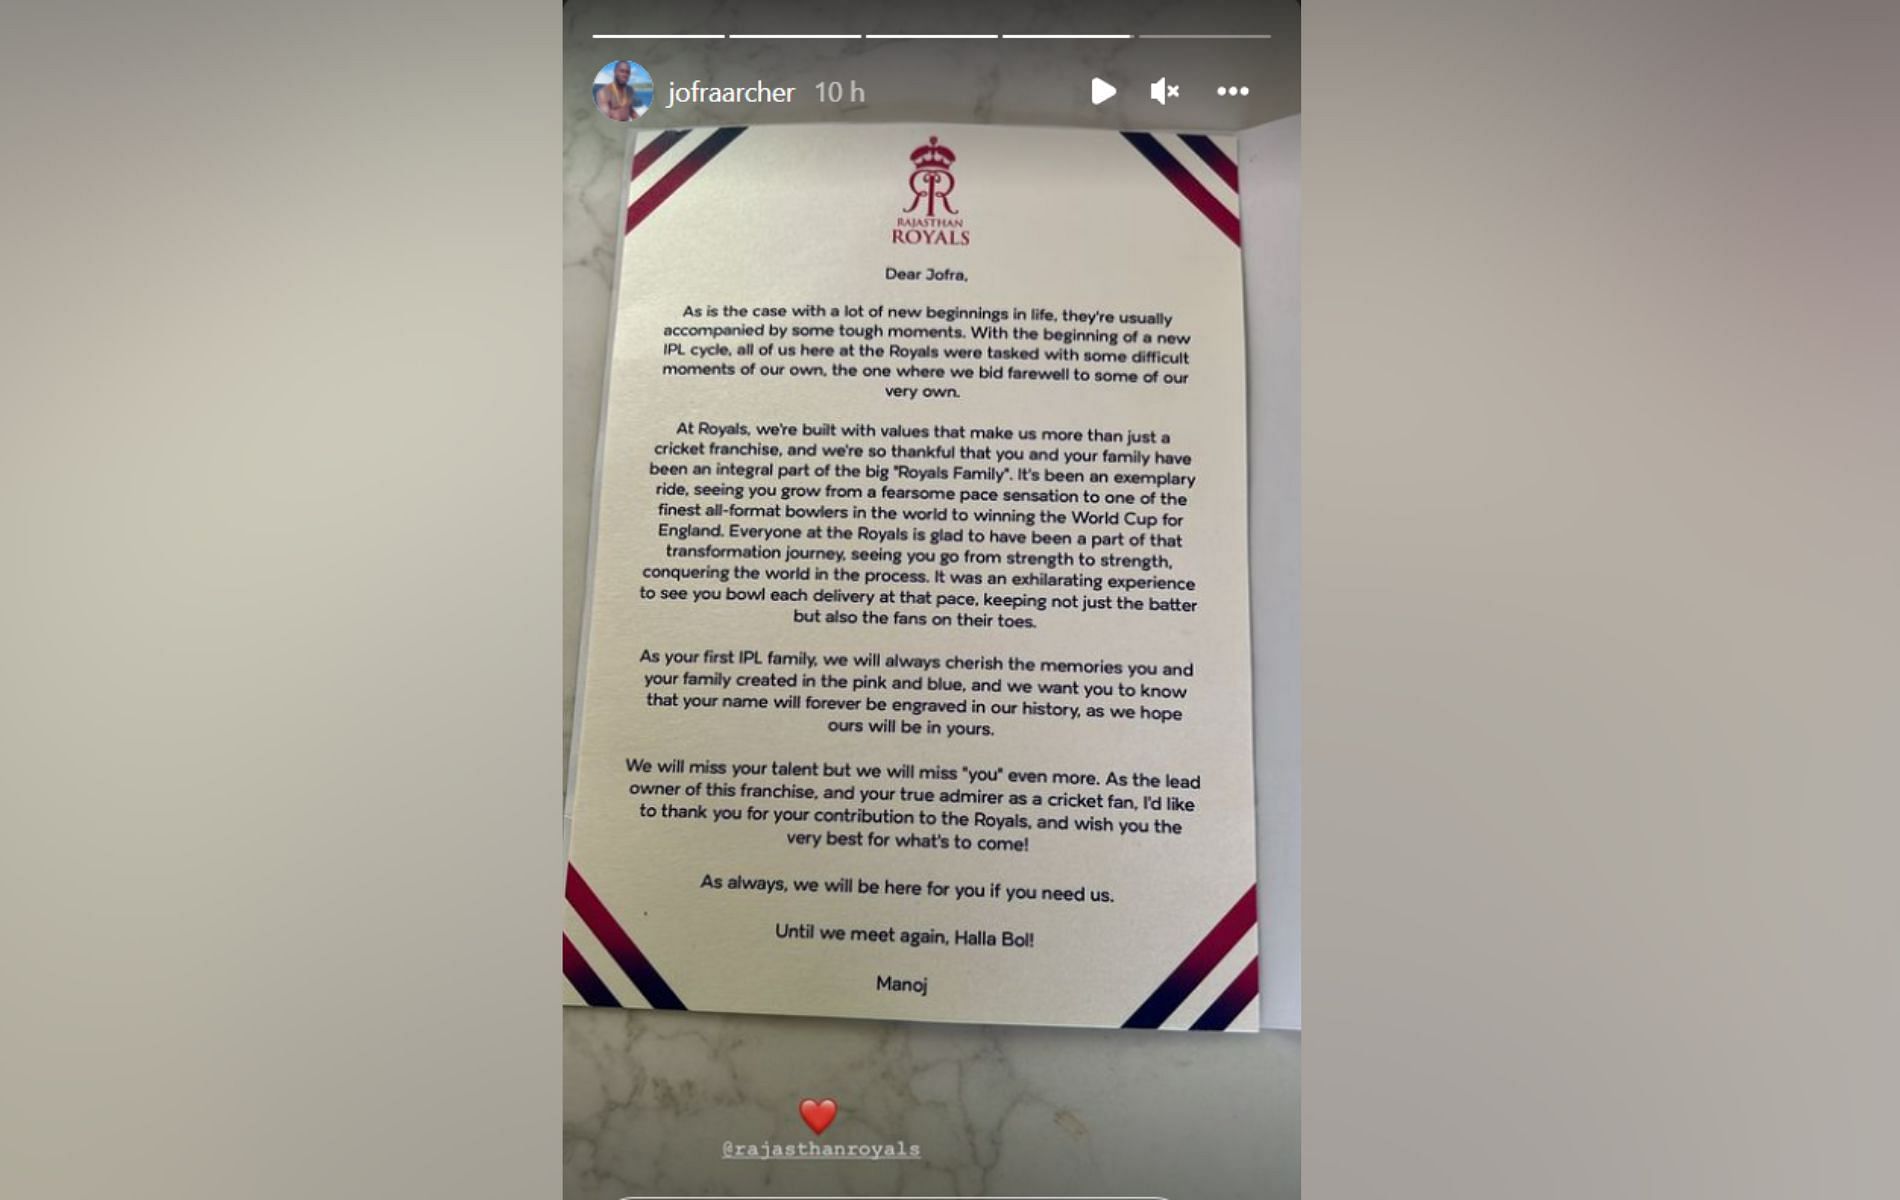 Rajasthan Royals sent a farewell message to Jofra Archer